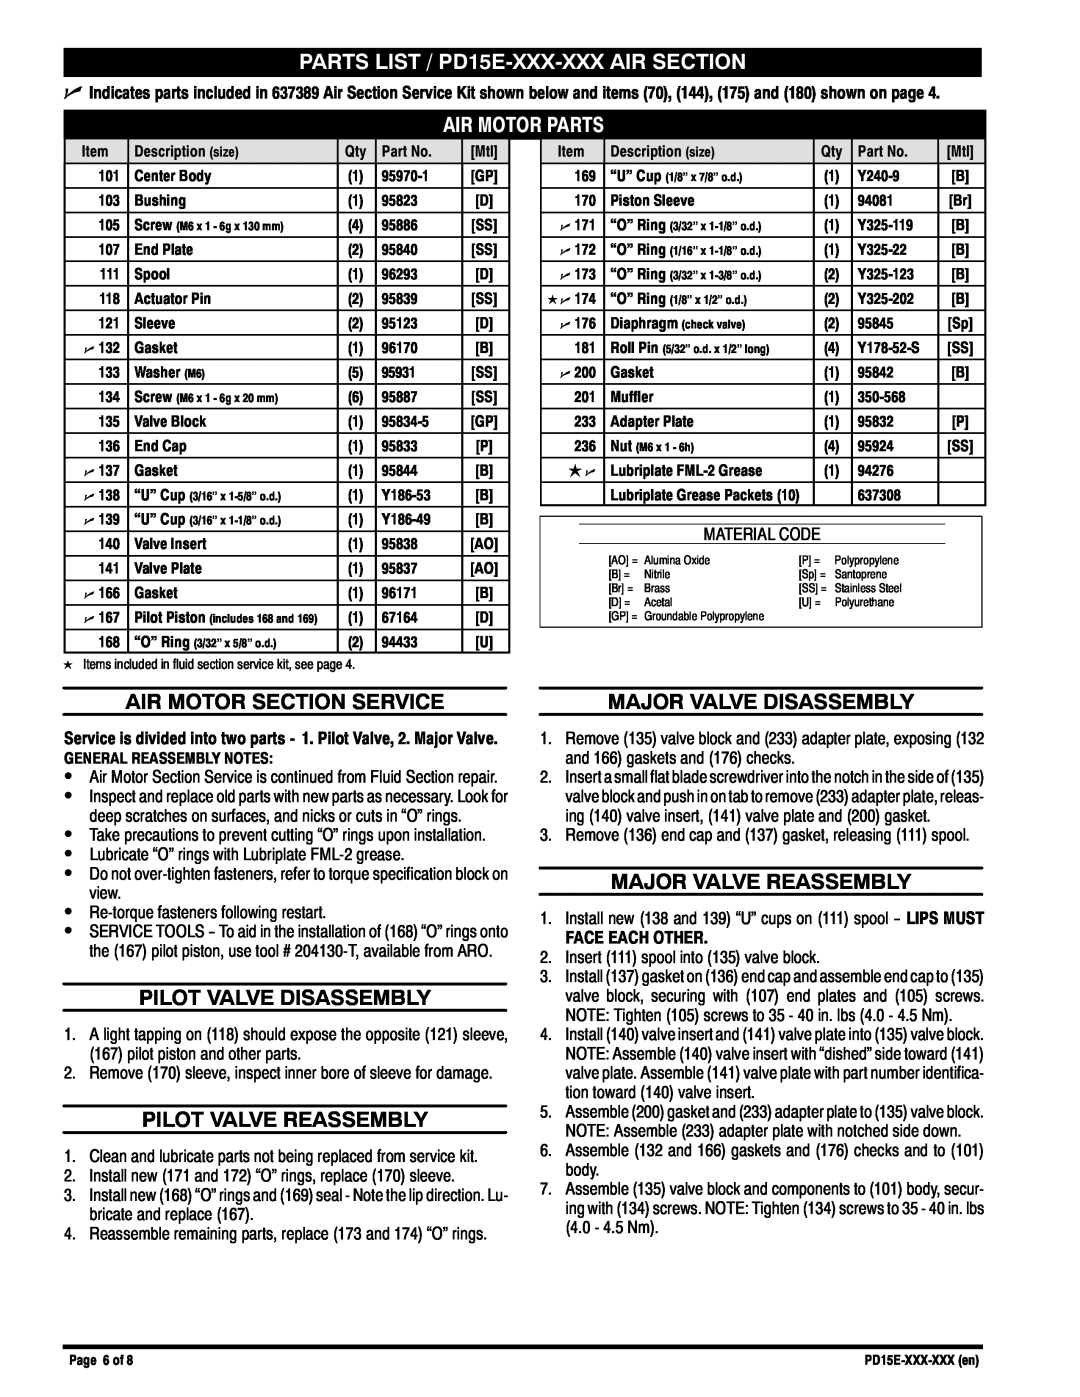 Ingersoll-Rand PD15E-FES-PXX manual PARTS LIST / PD15E-XXX-XXXAIR SECTION, Air Motor Parts, Air Motor Section Service 